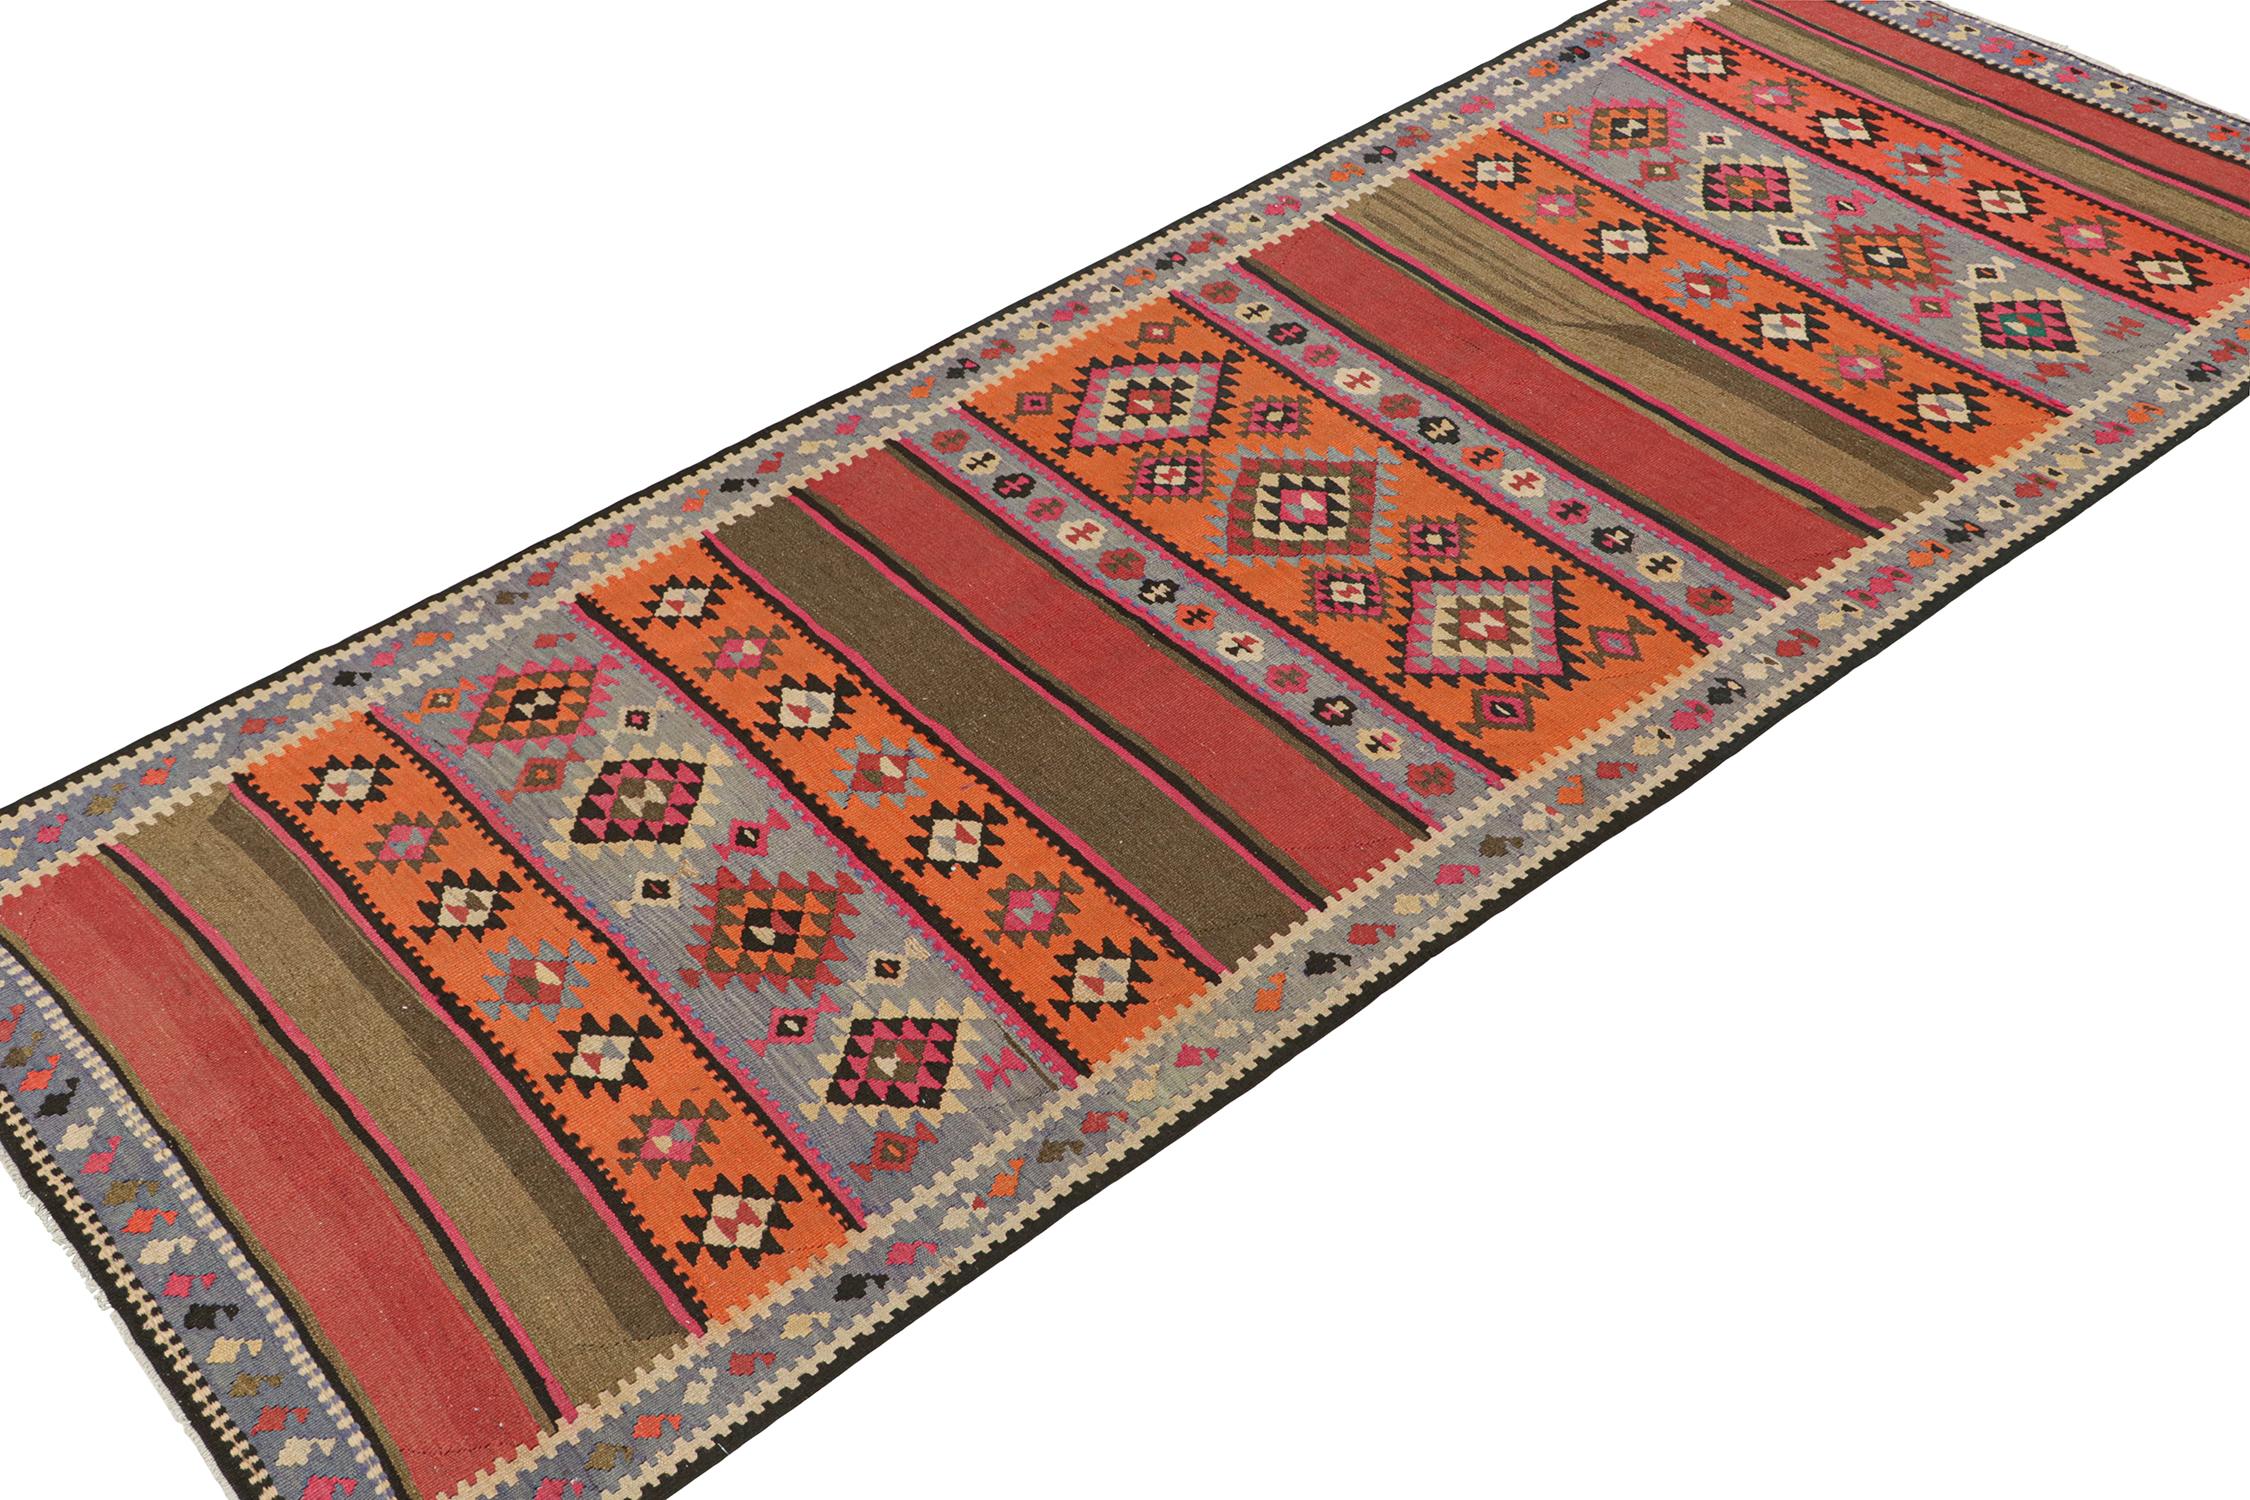 Tribal Vintage Northwest Persian Kilim with Vibrant Geometric Patterns by Rug & Kilim For Sale